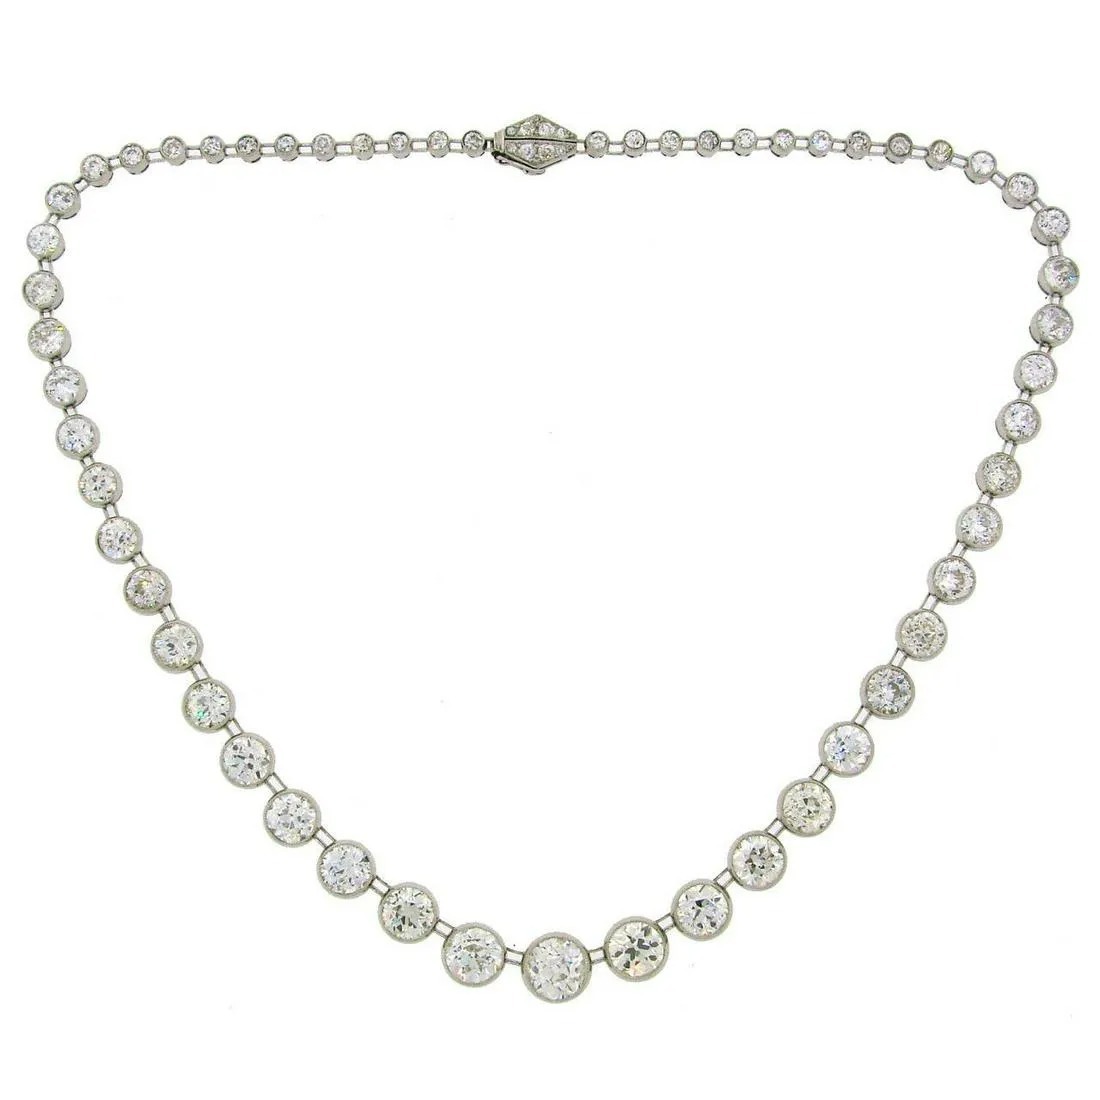 Art Deco-era diamond and platinum riviere necklace, est. $125,000-$150,000